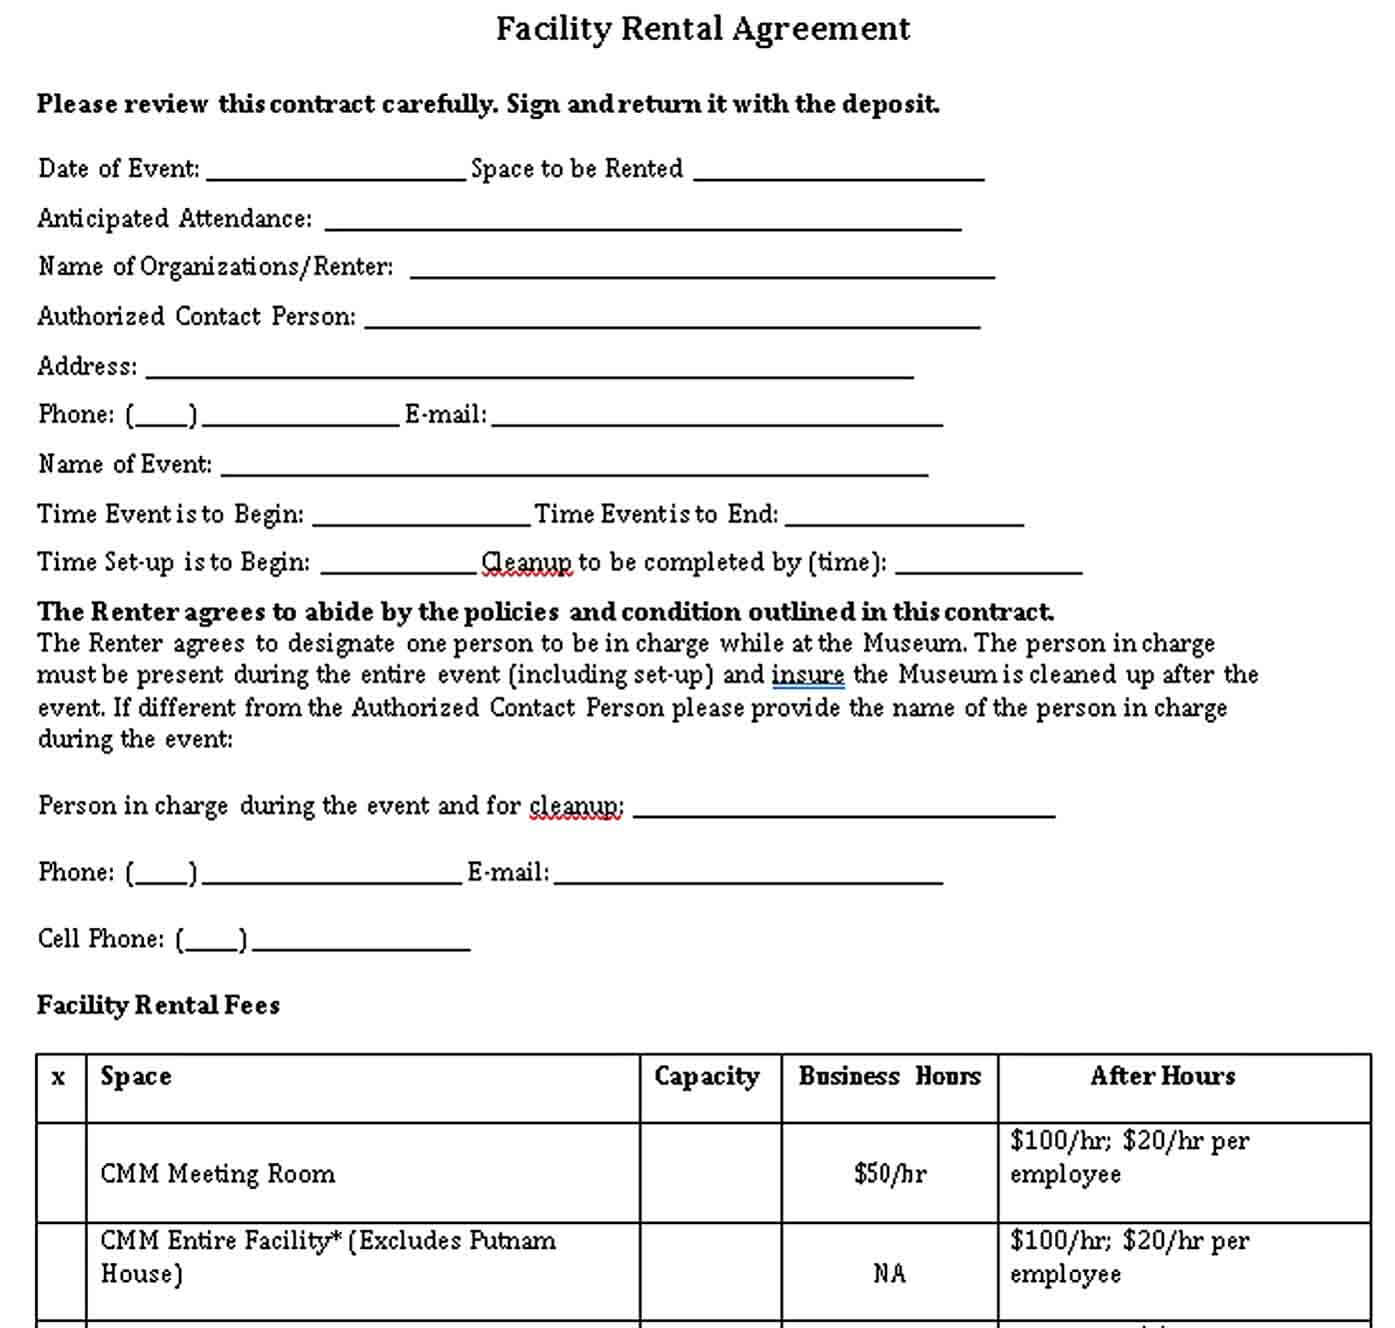 Sample Facility Rental Agreement Form